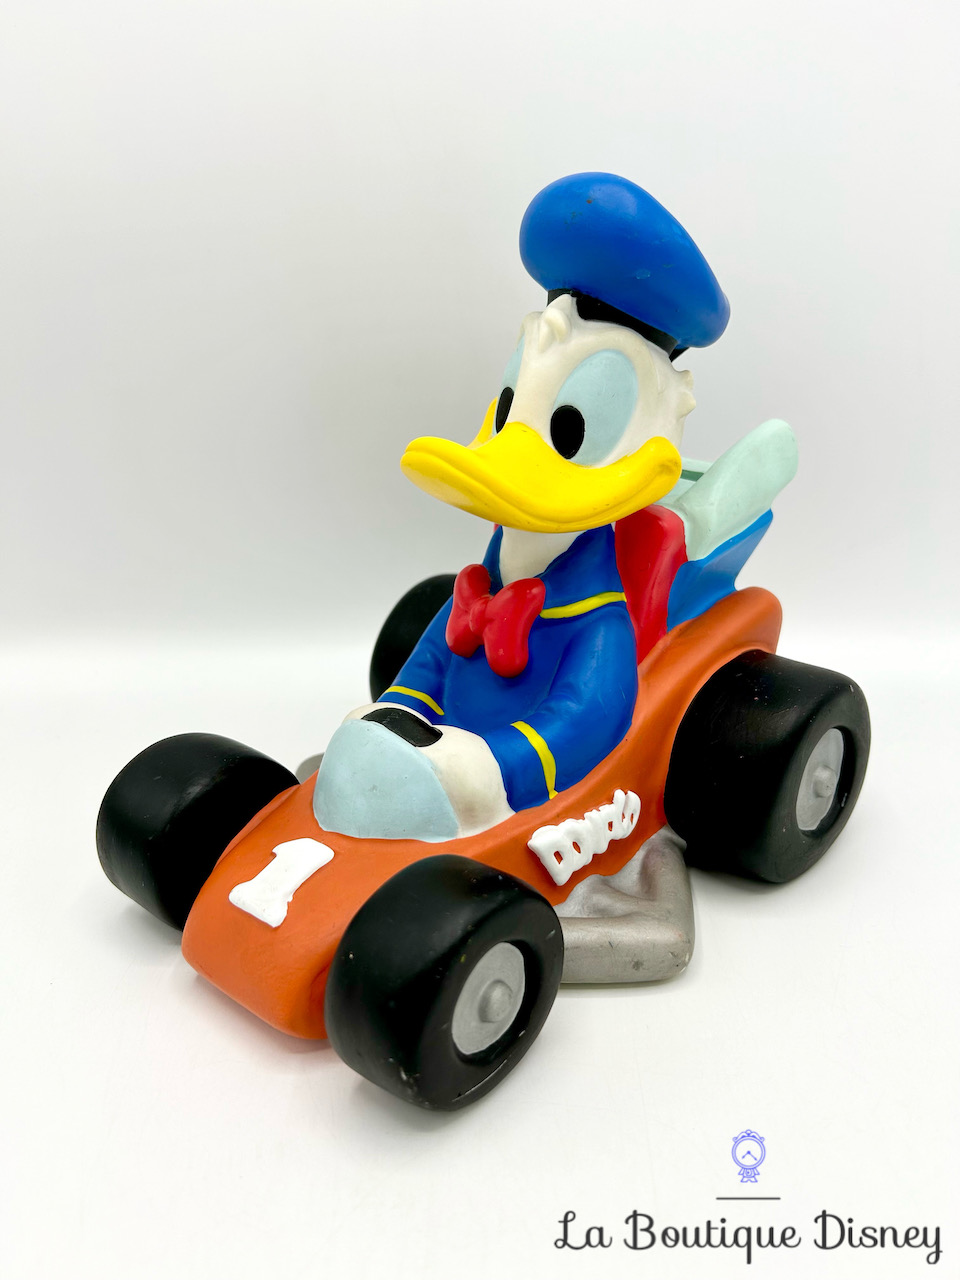 tirelire-donald-duck-karting-voiture-disney-bullyland-plastique-2